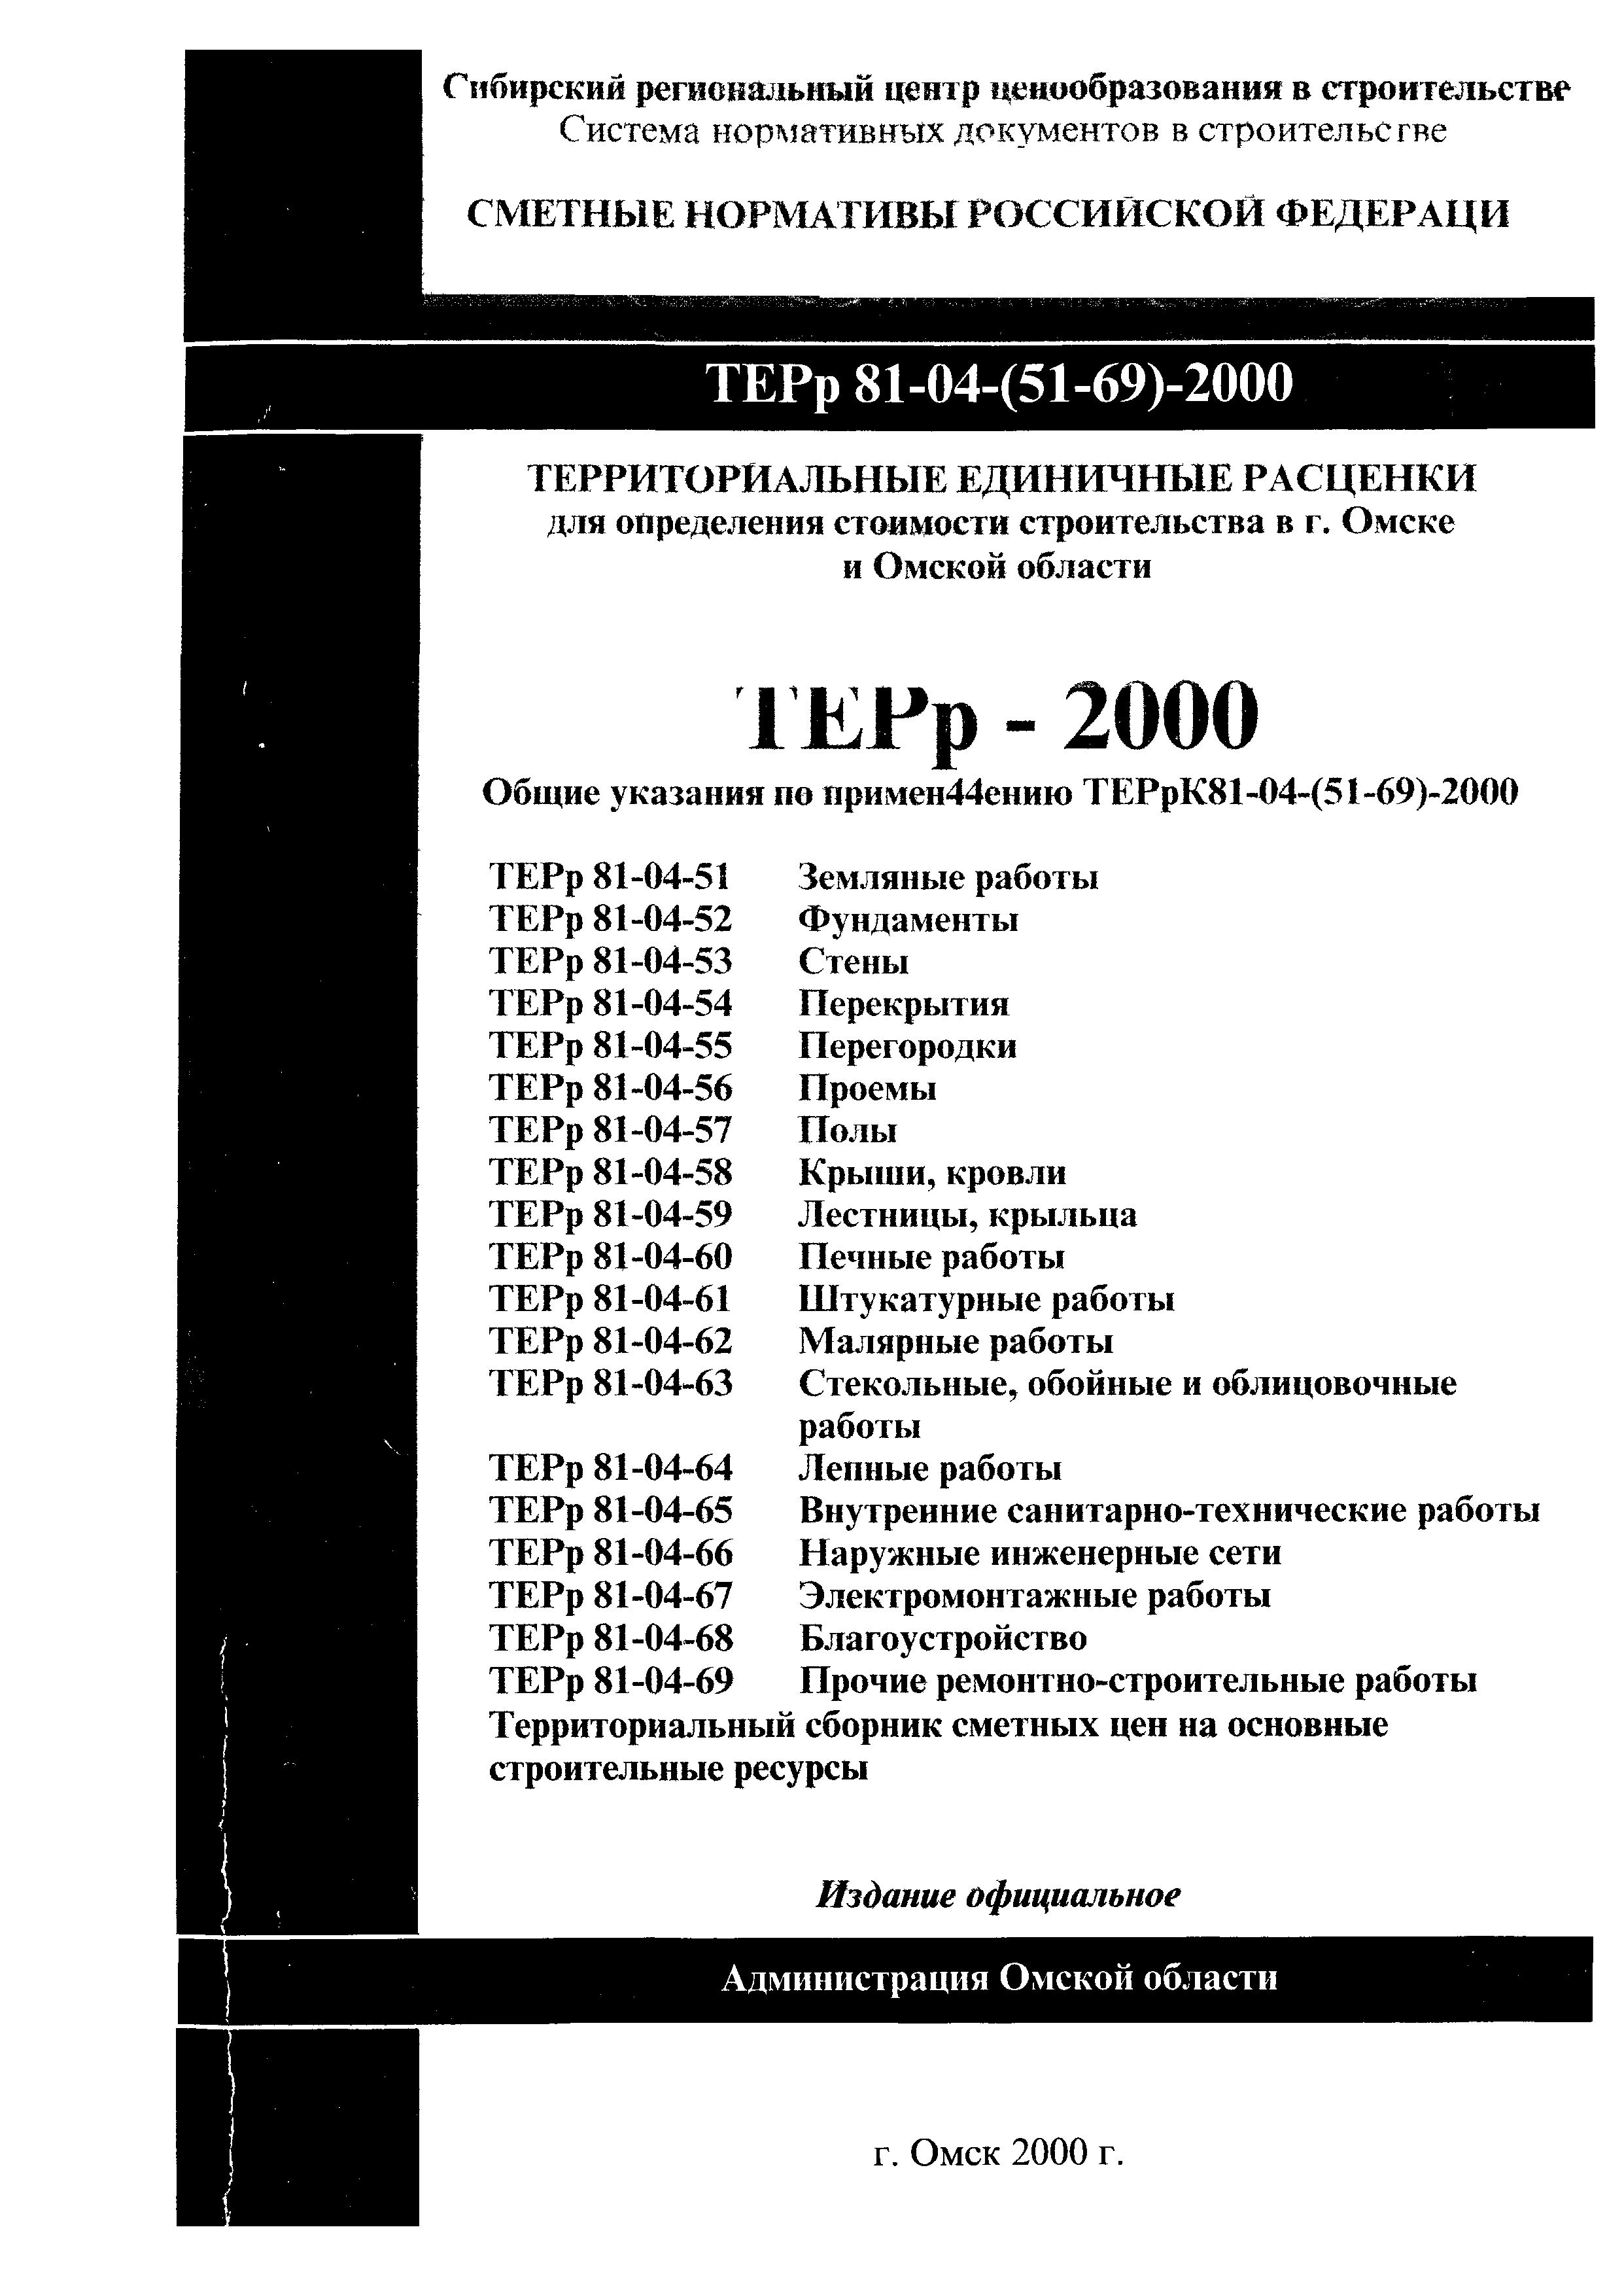 ТЕРр Омской области 2000-67